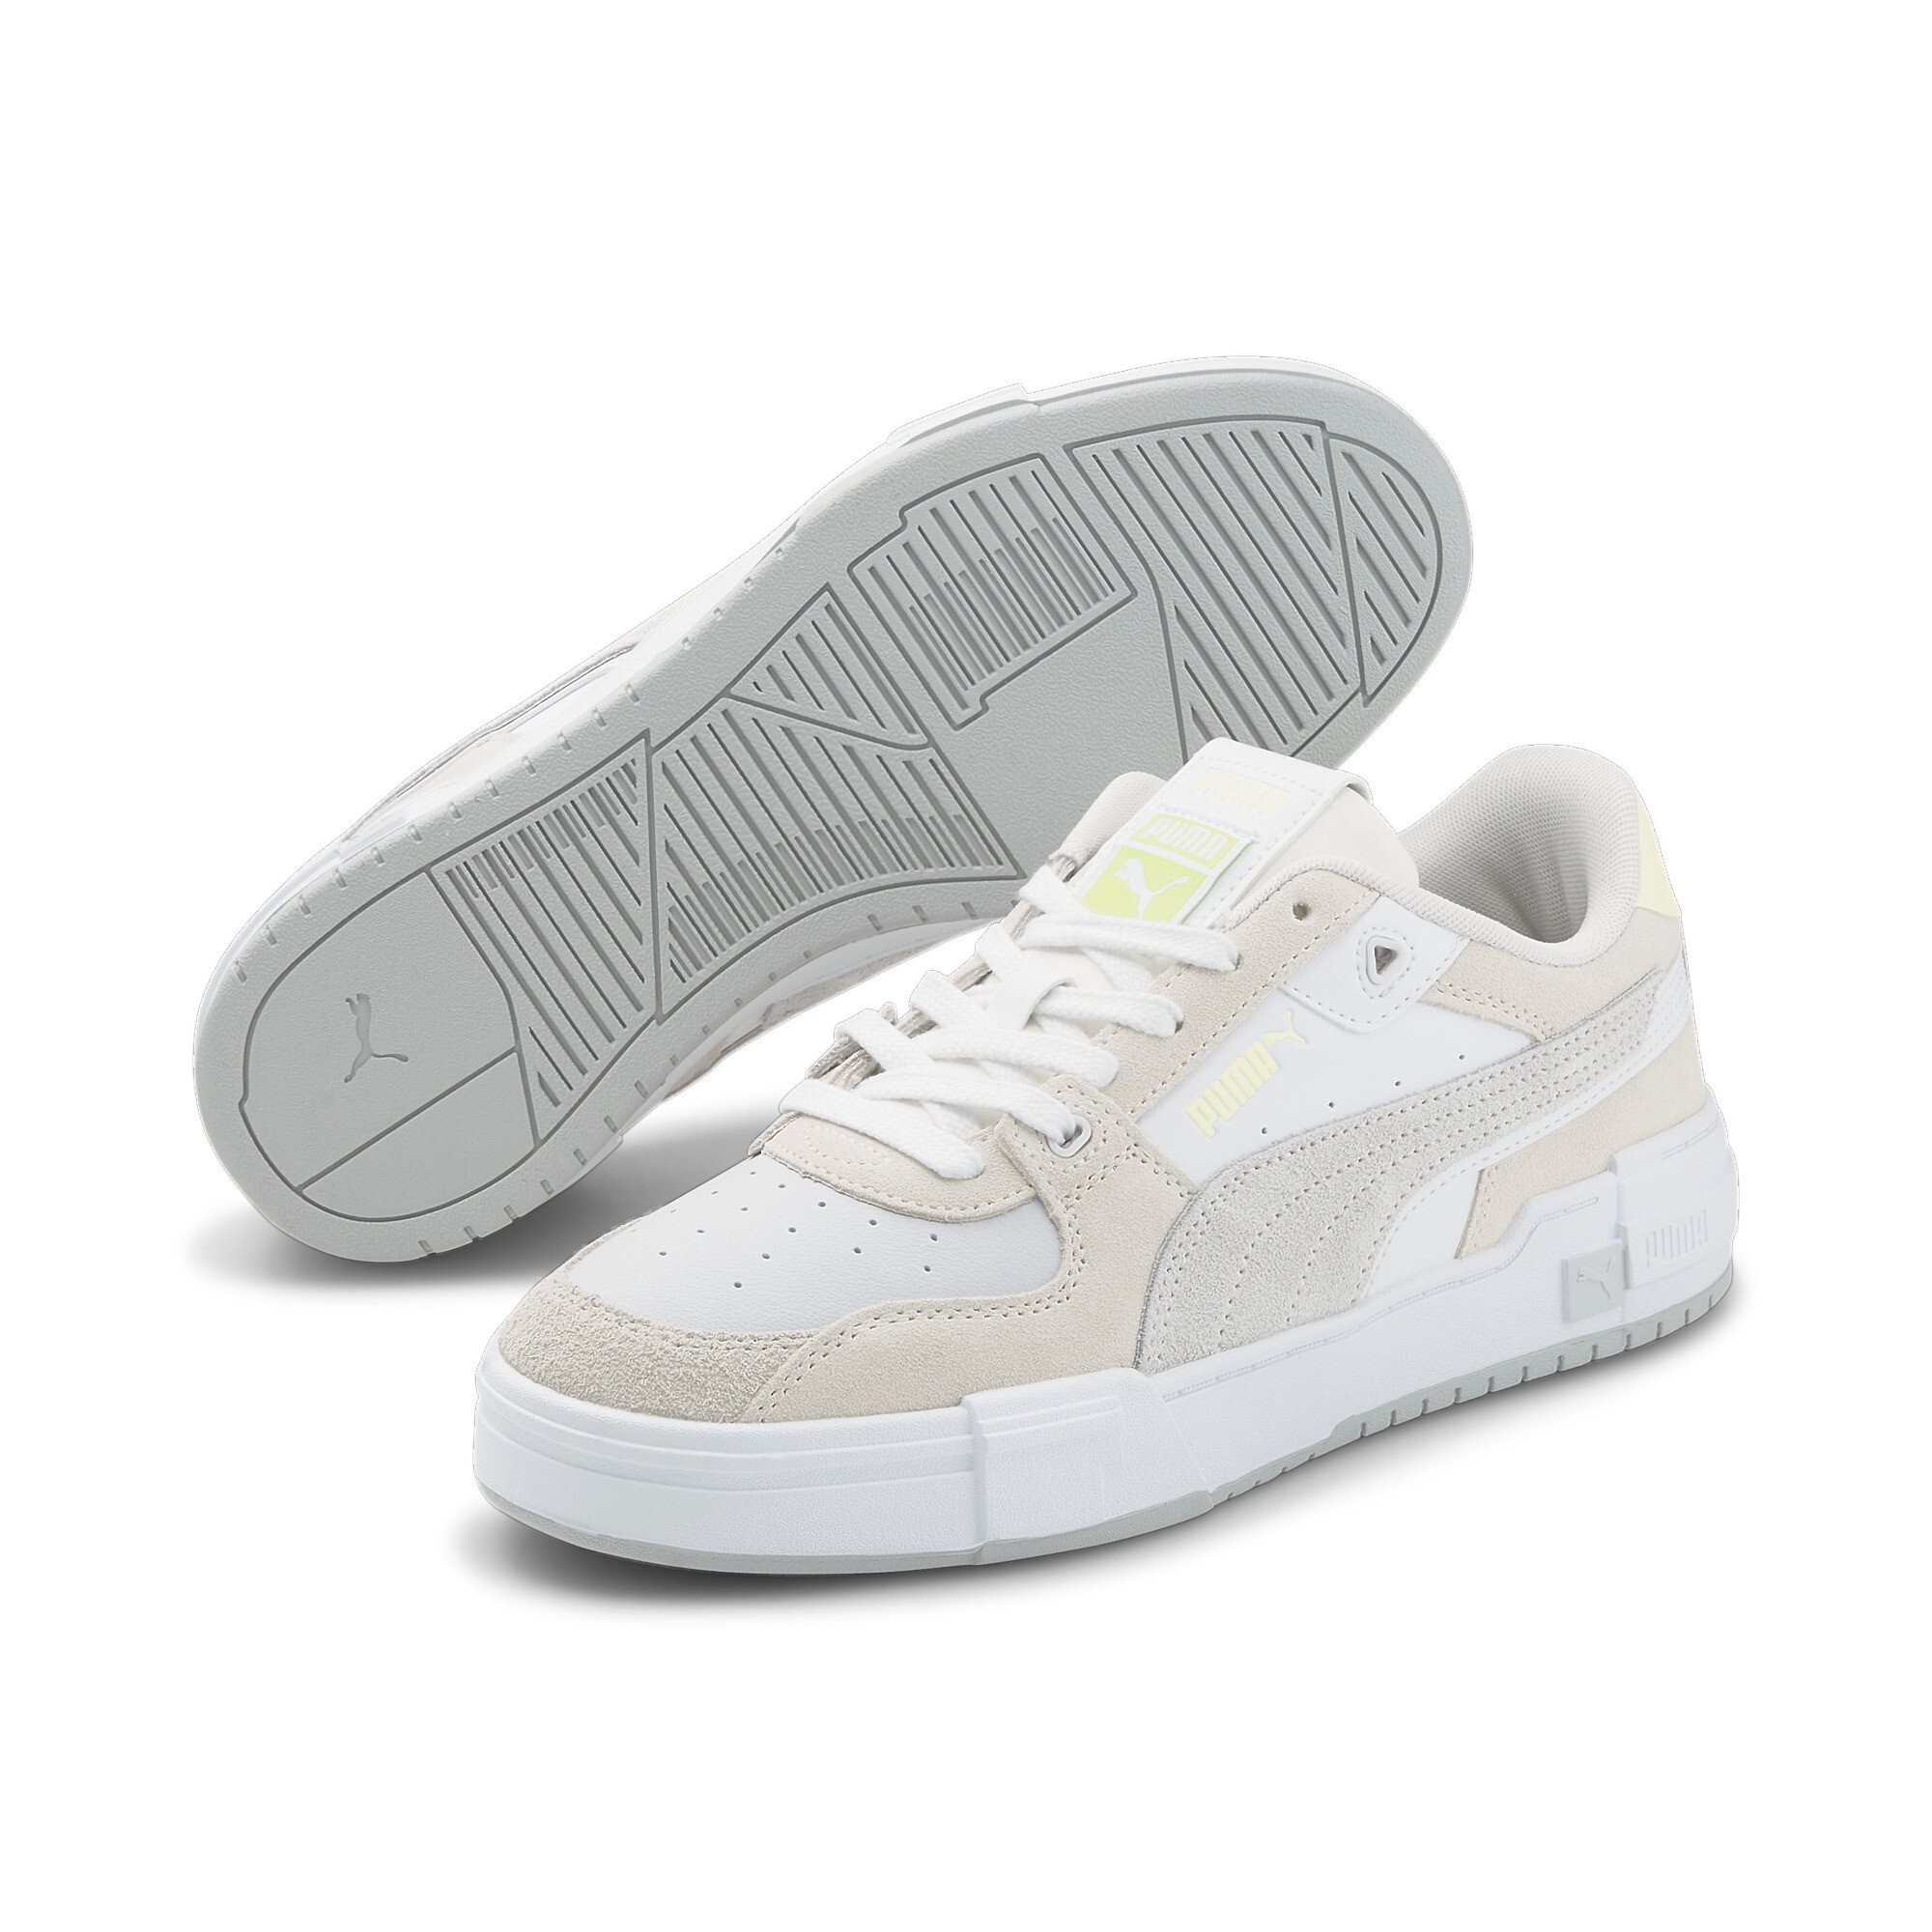 Men's Puma CA Pro Glitch Suede Sneakers, White, Size 45, Shoes